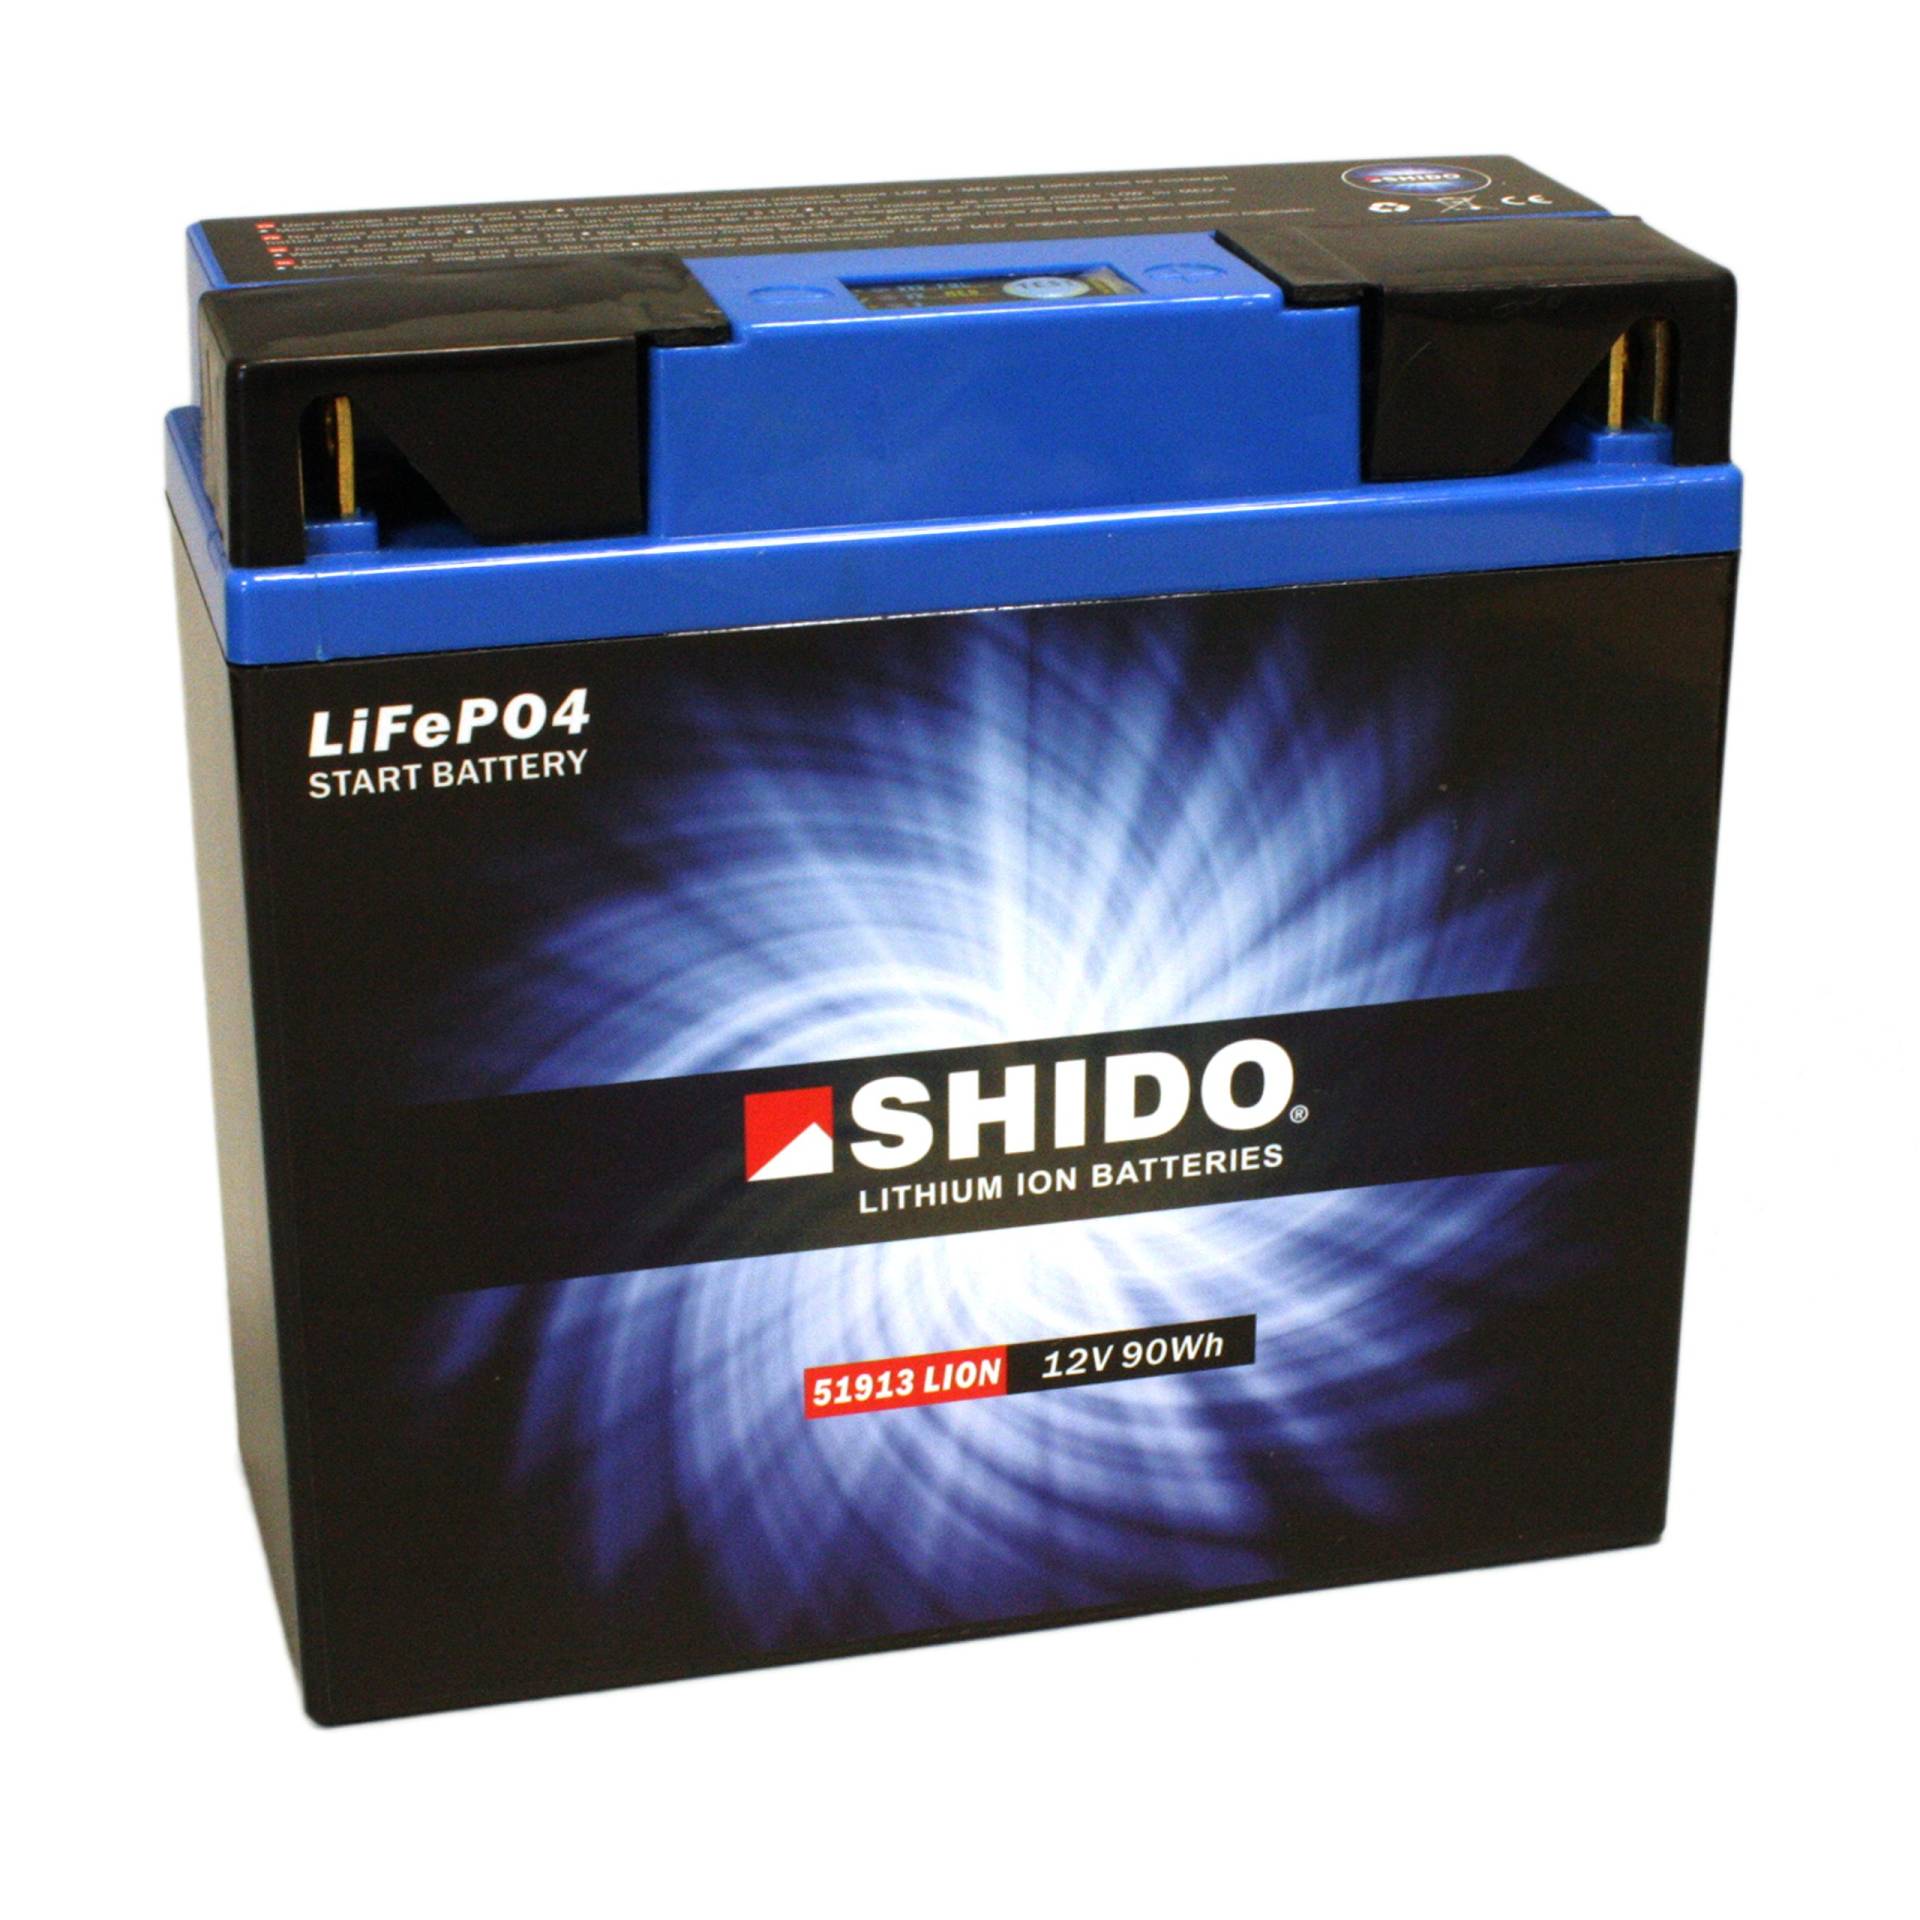 SHIDO 51913 LION -S- Batterie Lithium, Ion Blau (Preis inkl. EUR 7,50 Pfand) von SHIDO